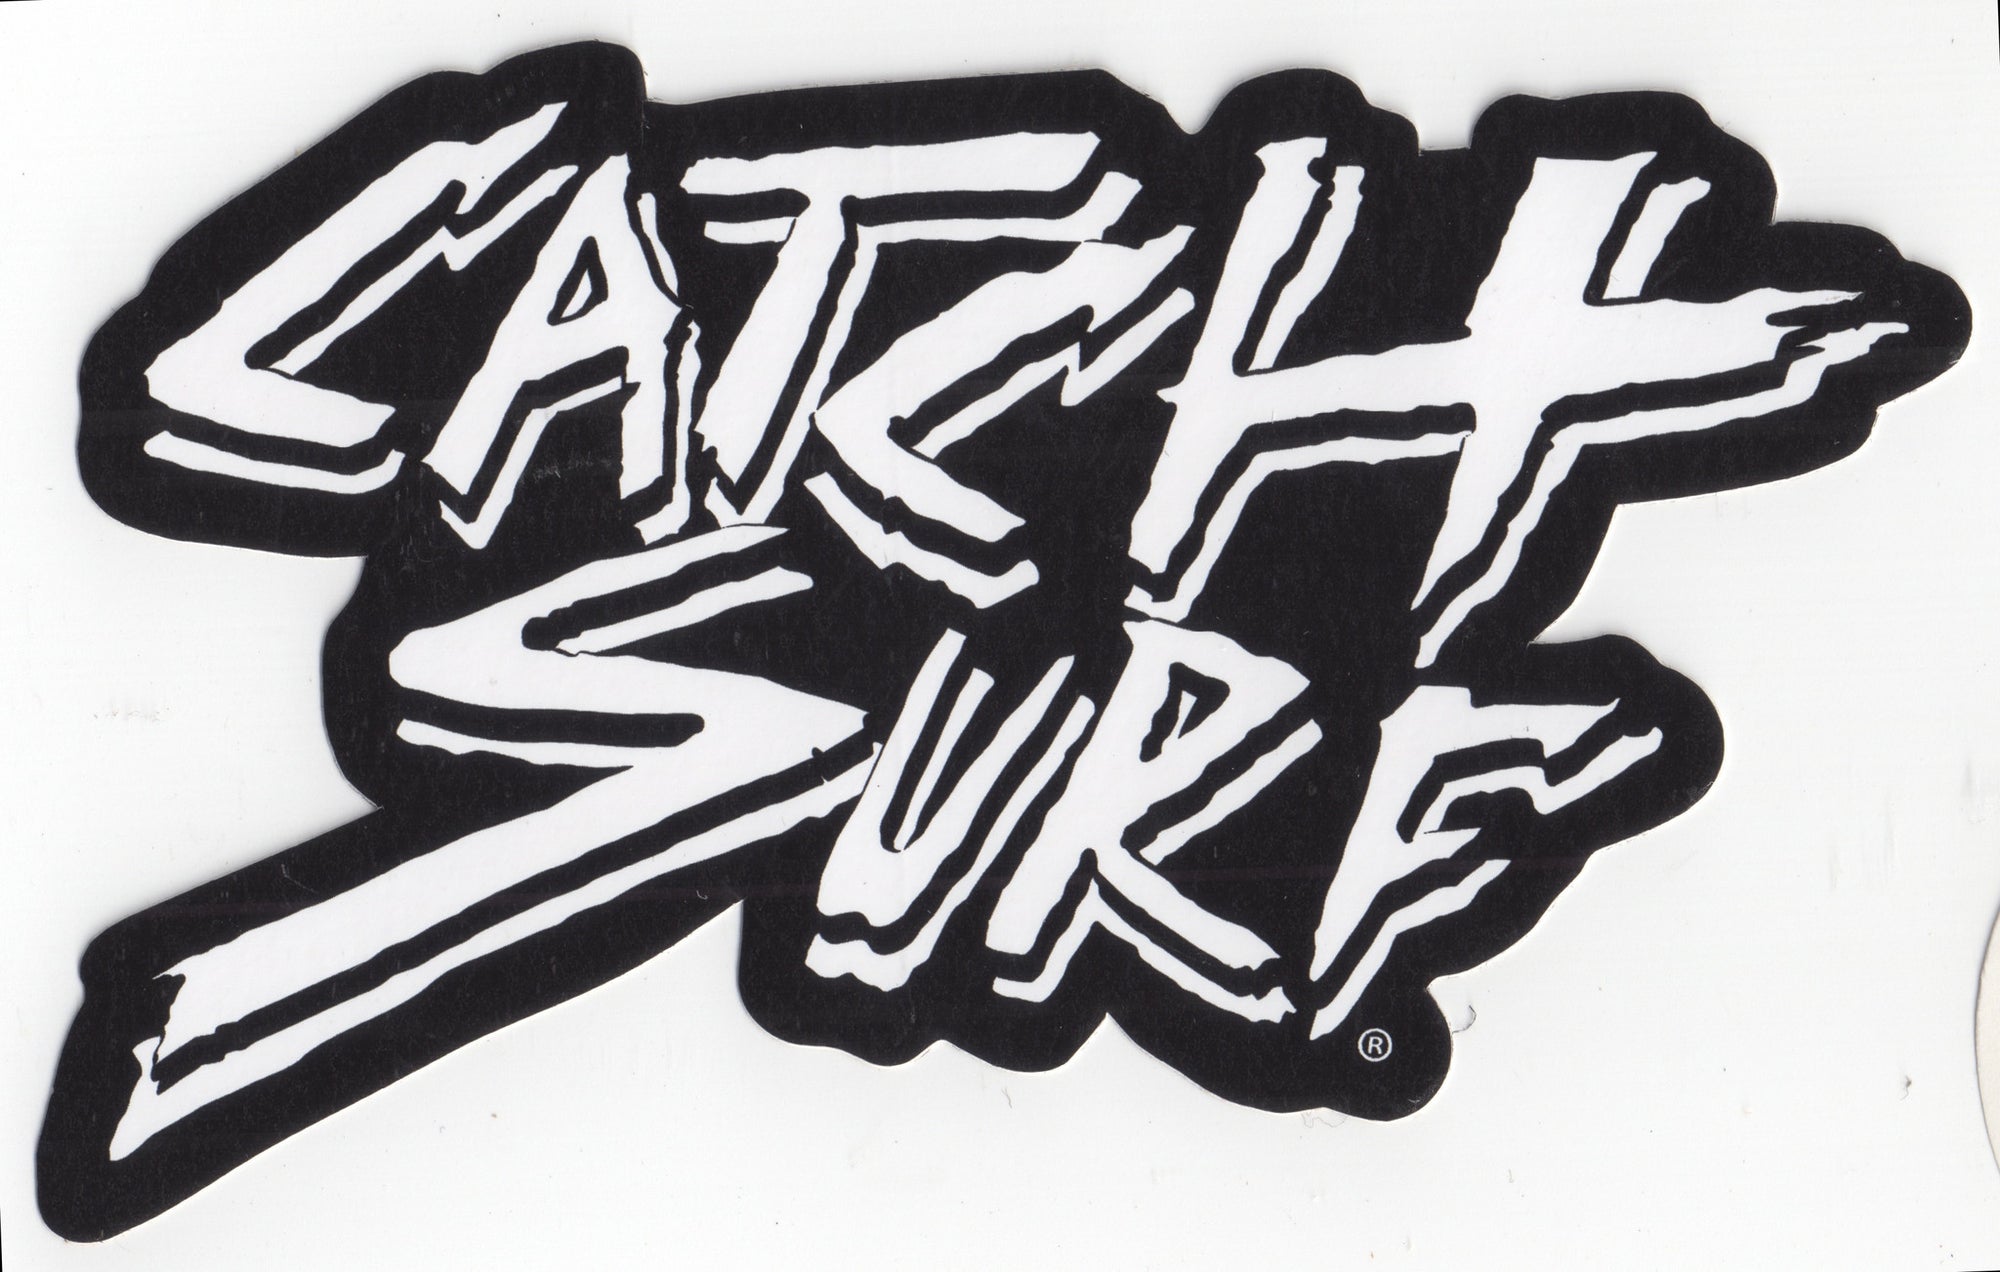 Catch Surf Logo Large-Catch Surf-beater,black,board,brand,catch,sticker,surf,surfboard,white